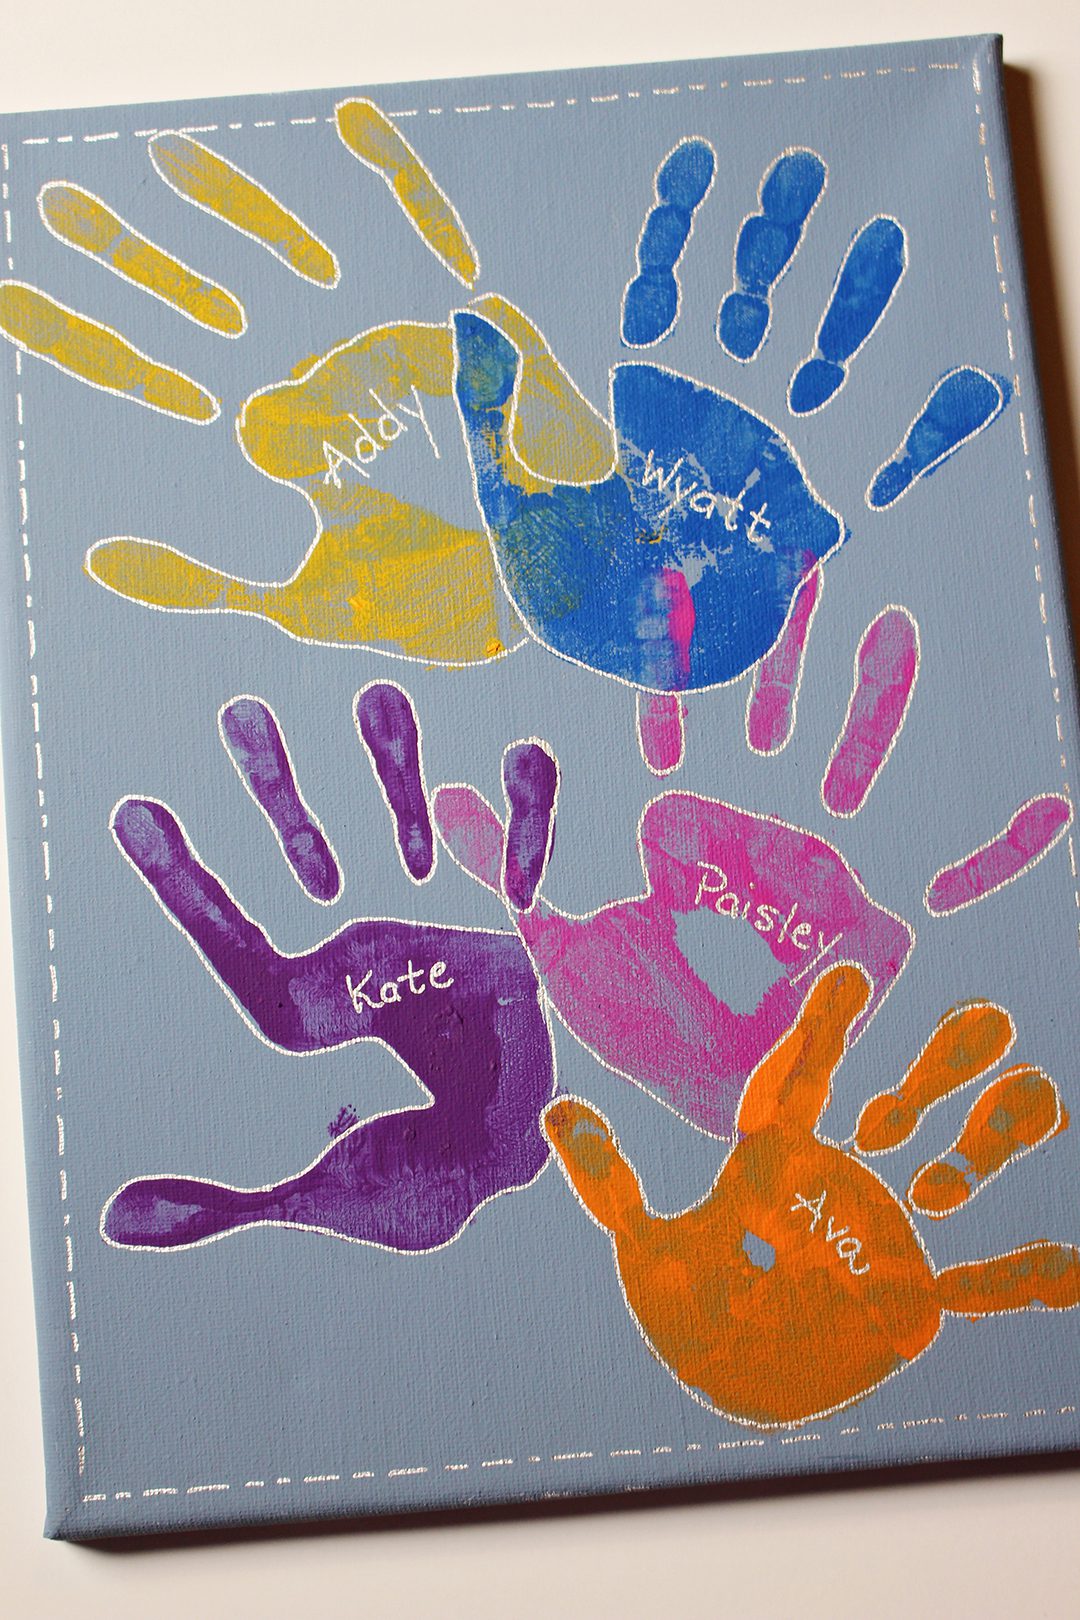 https://welcometonanas.com/wp-content/uploads/2020/03/Welcome-to-Nanas-special-collage-handprint-art-kids-paint-hand-print-craft-project-grandparent-2.jpg